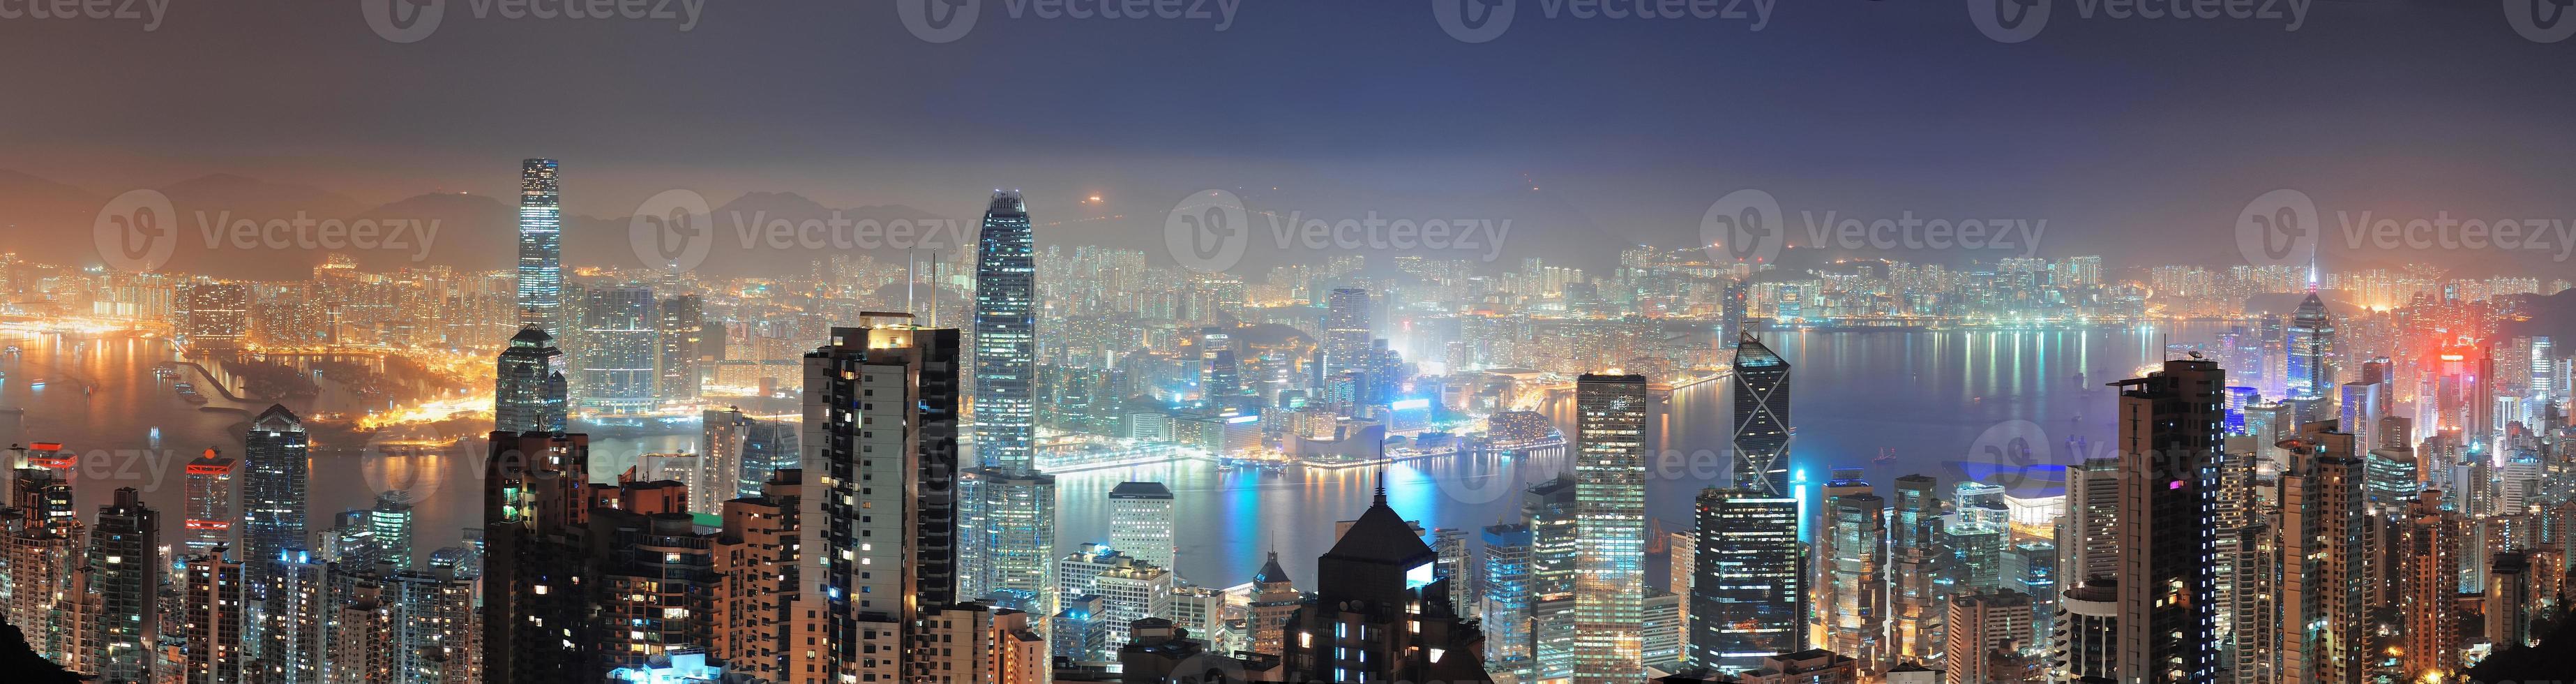 Hong Kong à noite foto